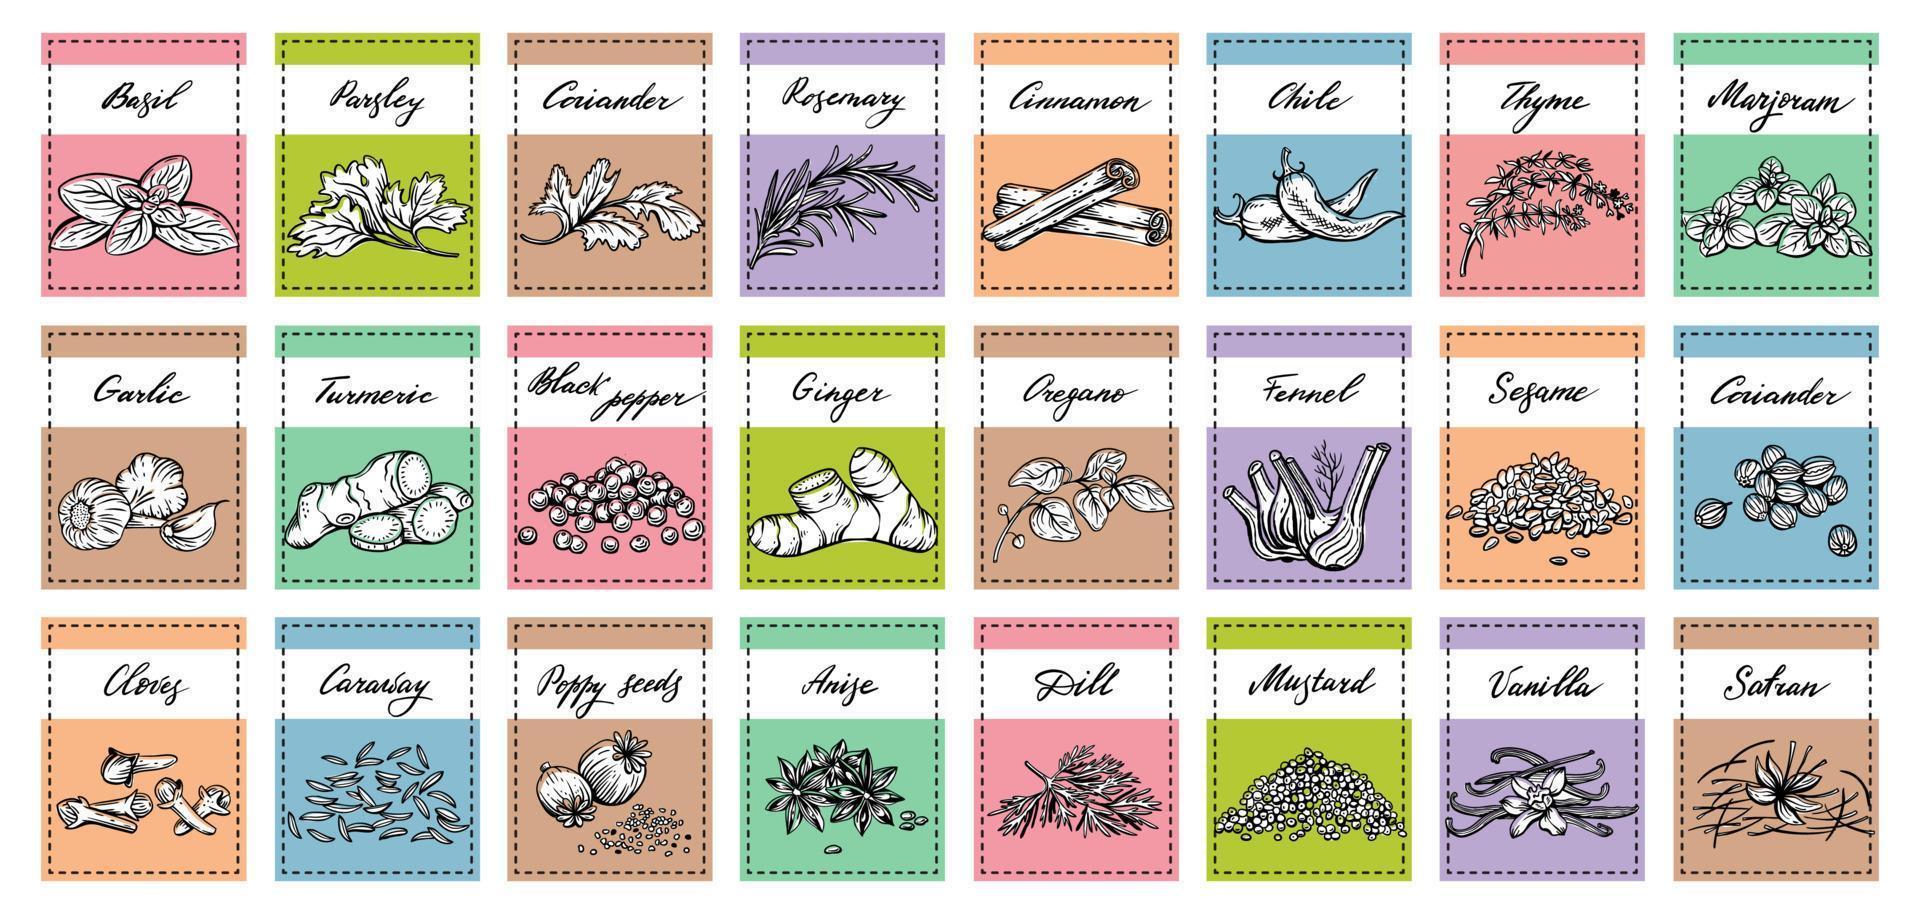 Vector set of stickers for spices.  basil, parsley, coriander, rosemary, cinnamon, chili, pepper, thyme, turmeric, black pepper, ginger, oregano, cumin, poppy, anise, garlic, dill, mustard, saffron